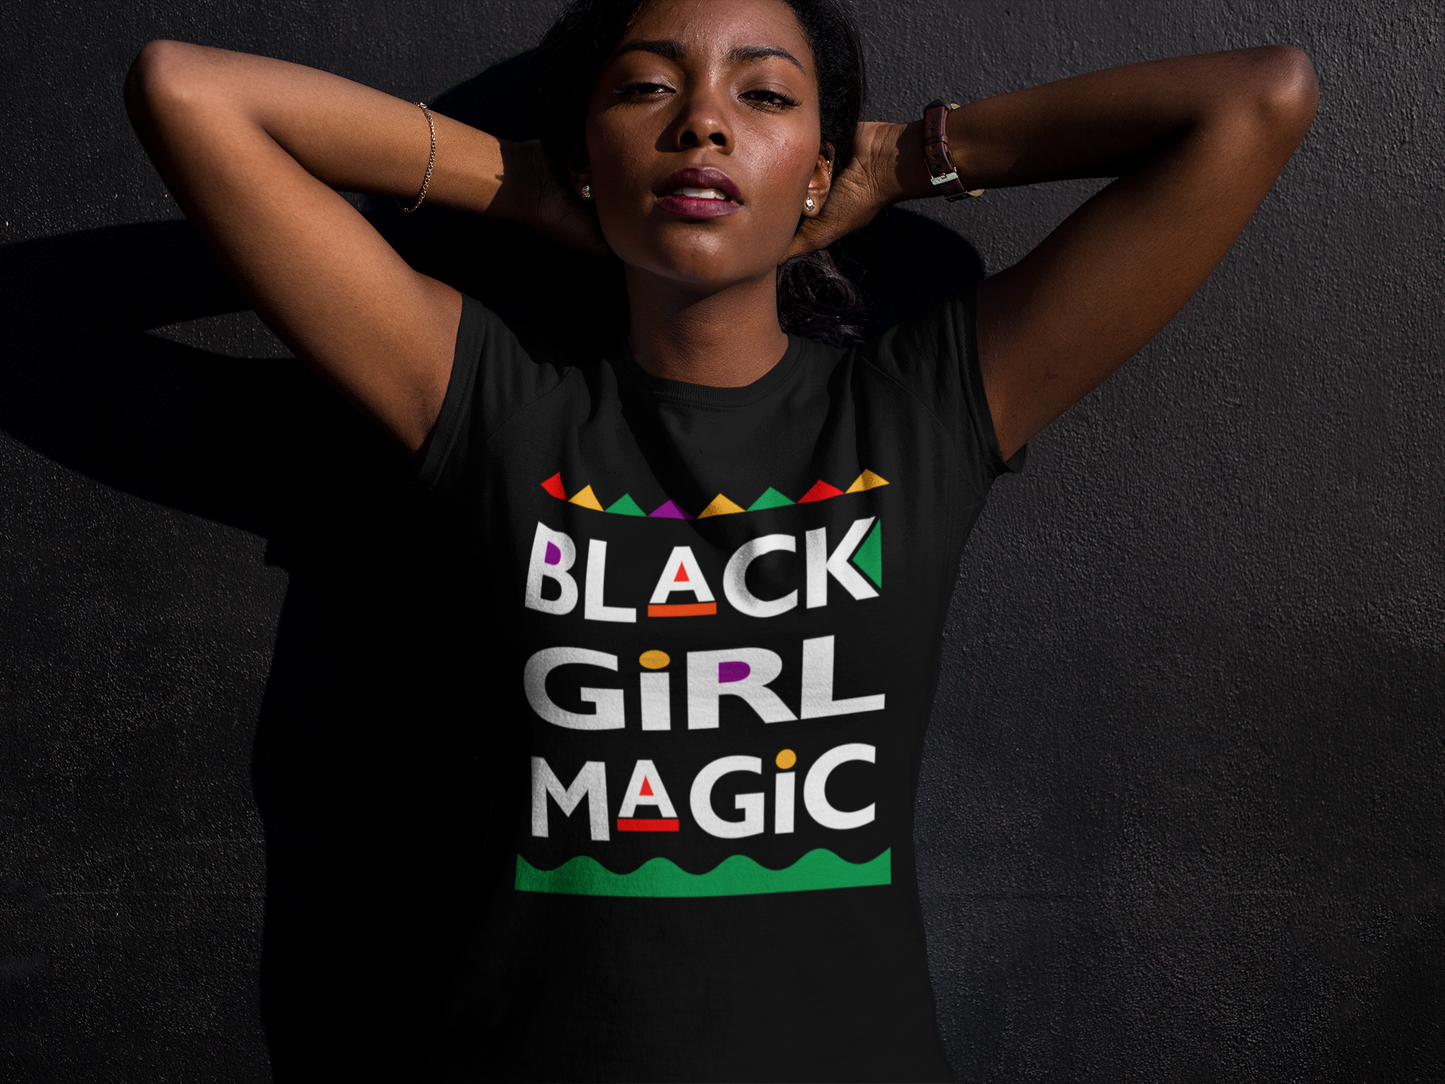 BLM - Black Girl Magic 90's Edition Shirt - Black Short Sleeve